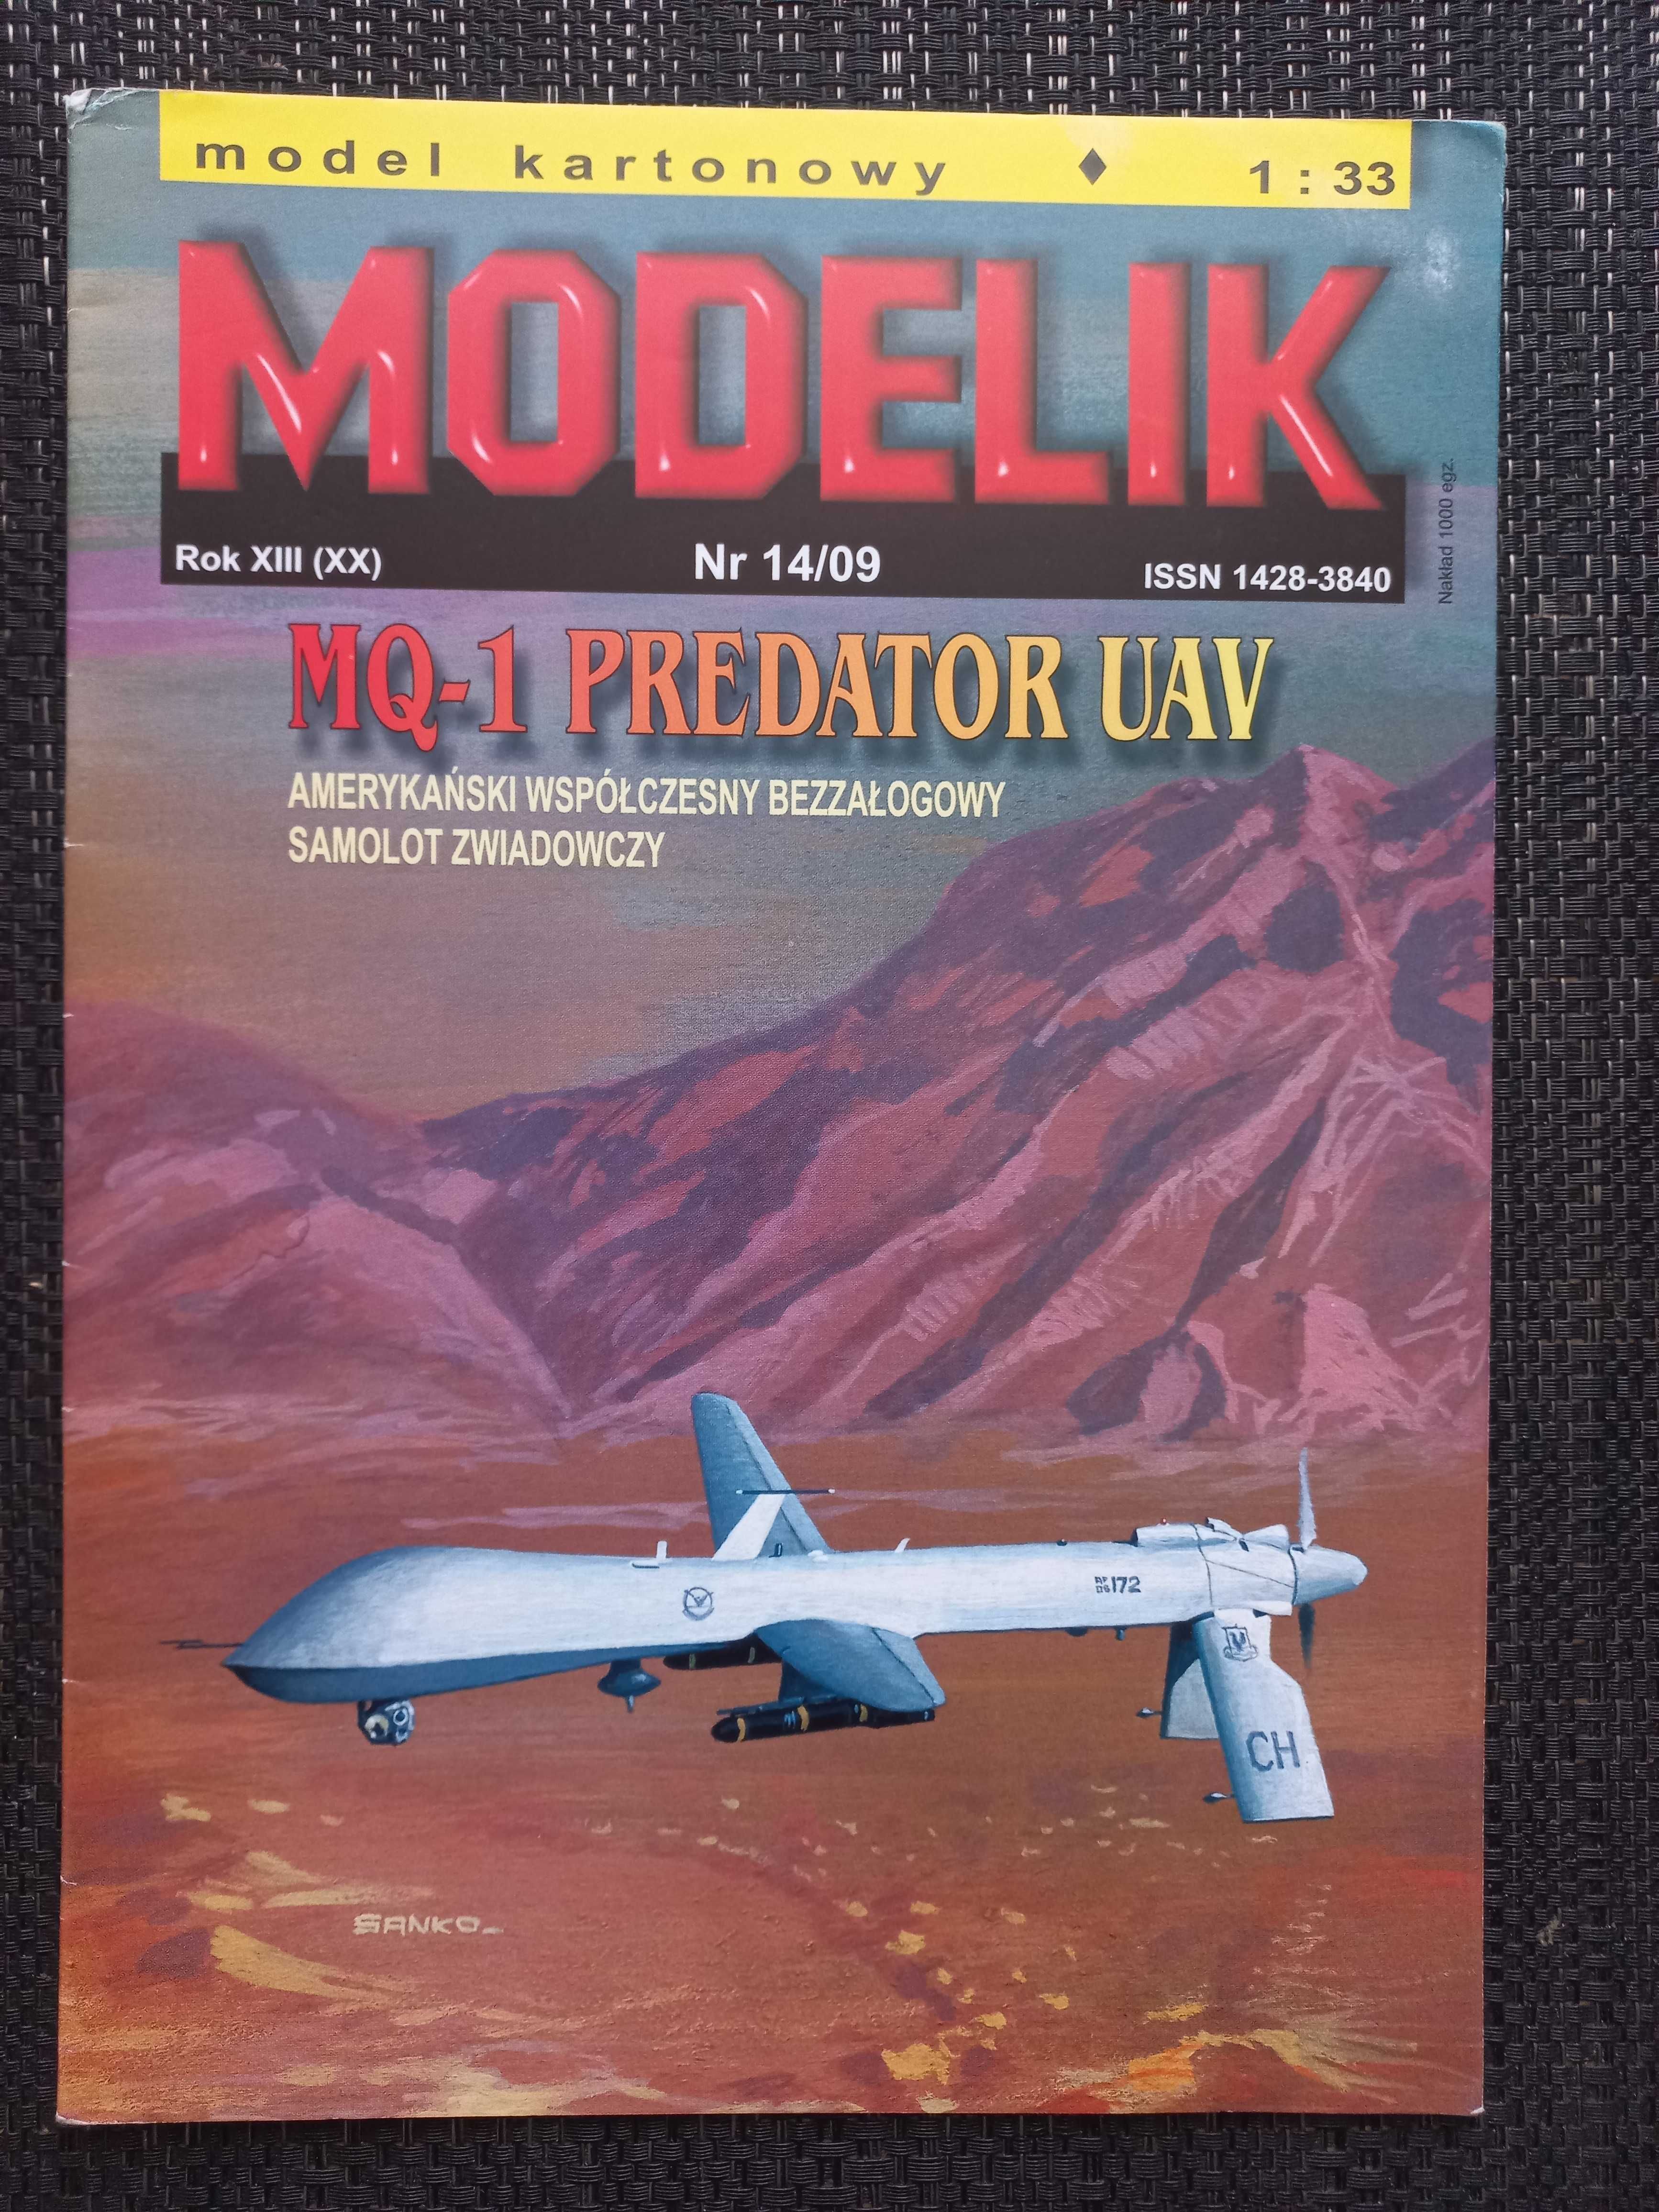 Model Kartonowy Modelik 14/09 MQ-1 PREDATOR